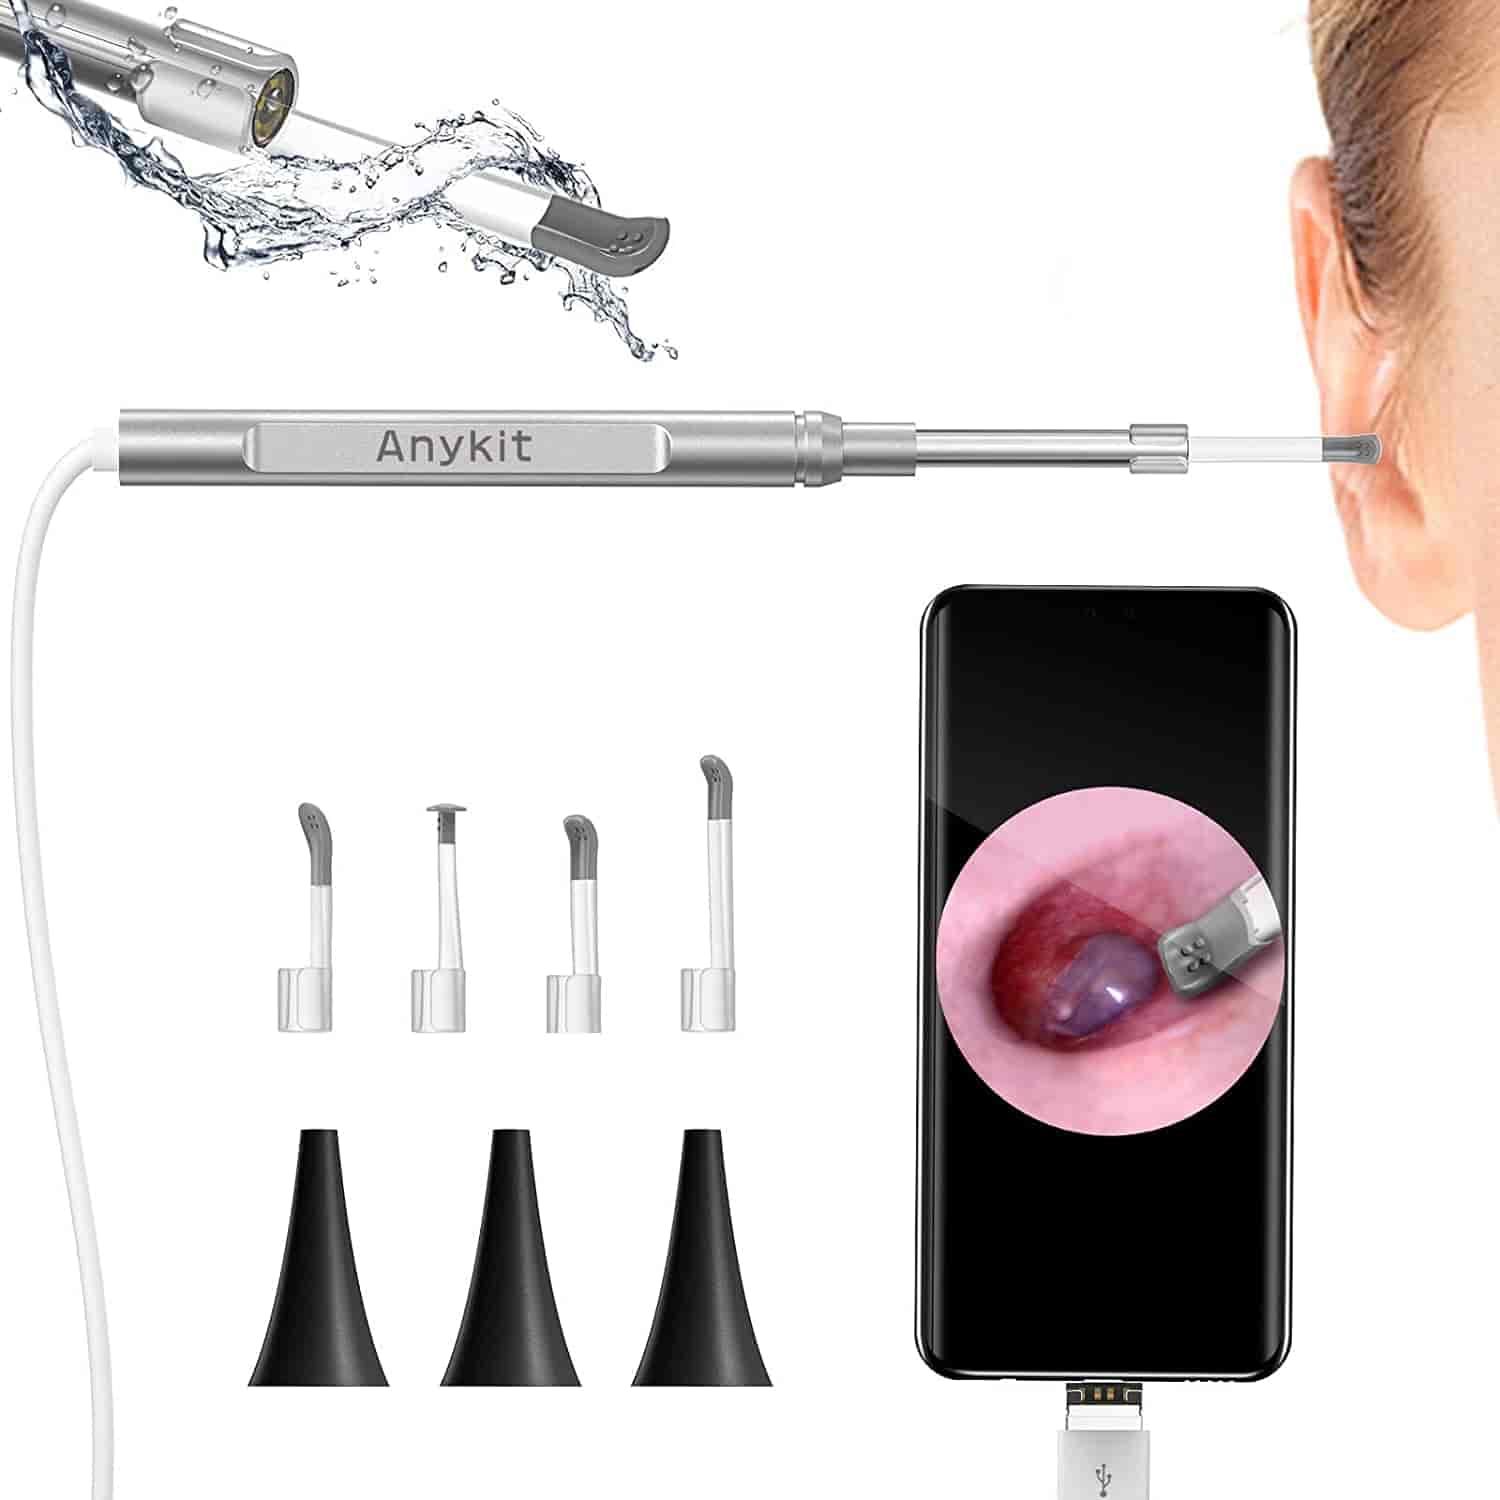 anykit-ear-wax-removal-tool